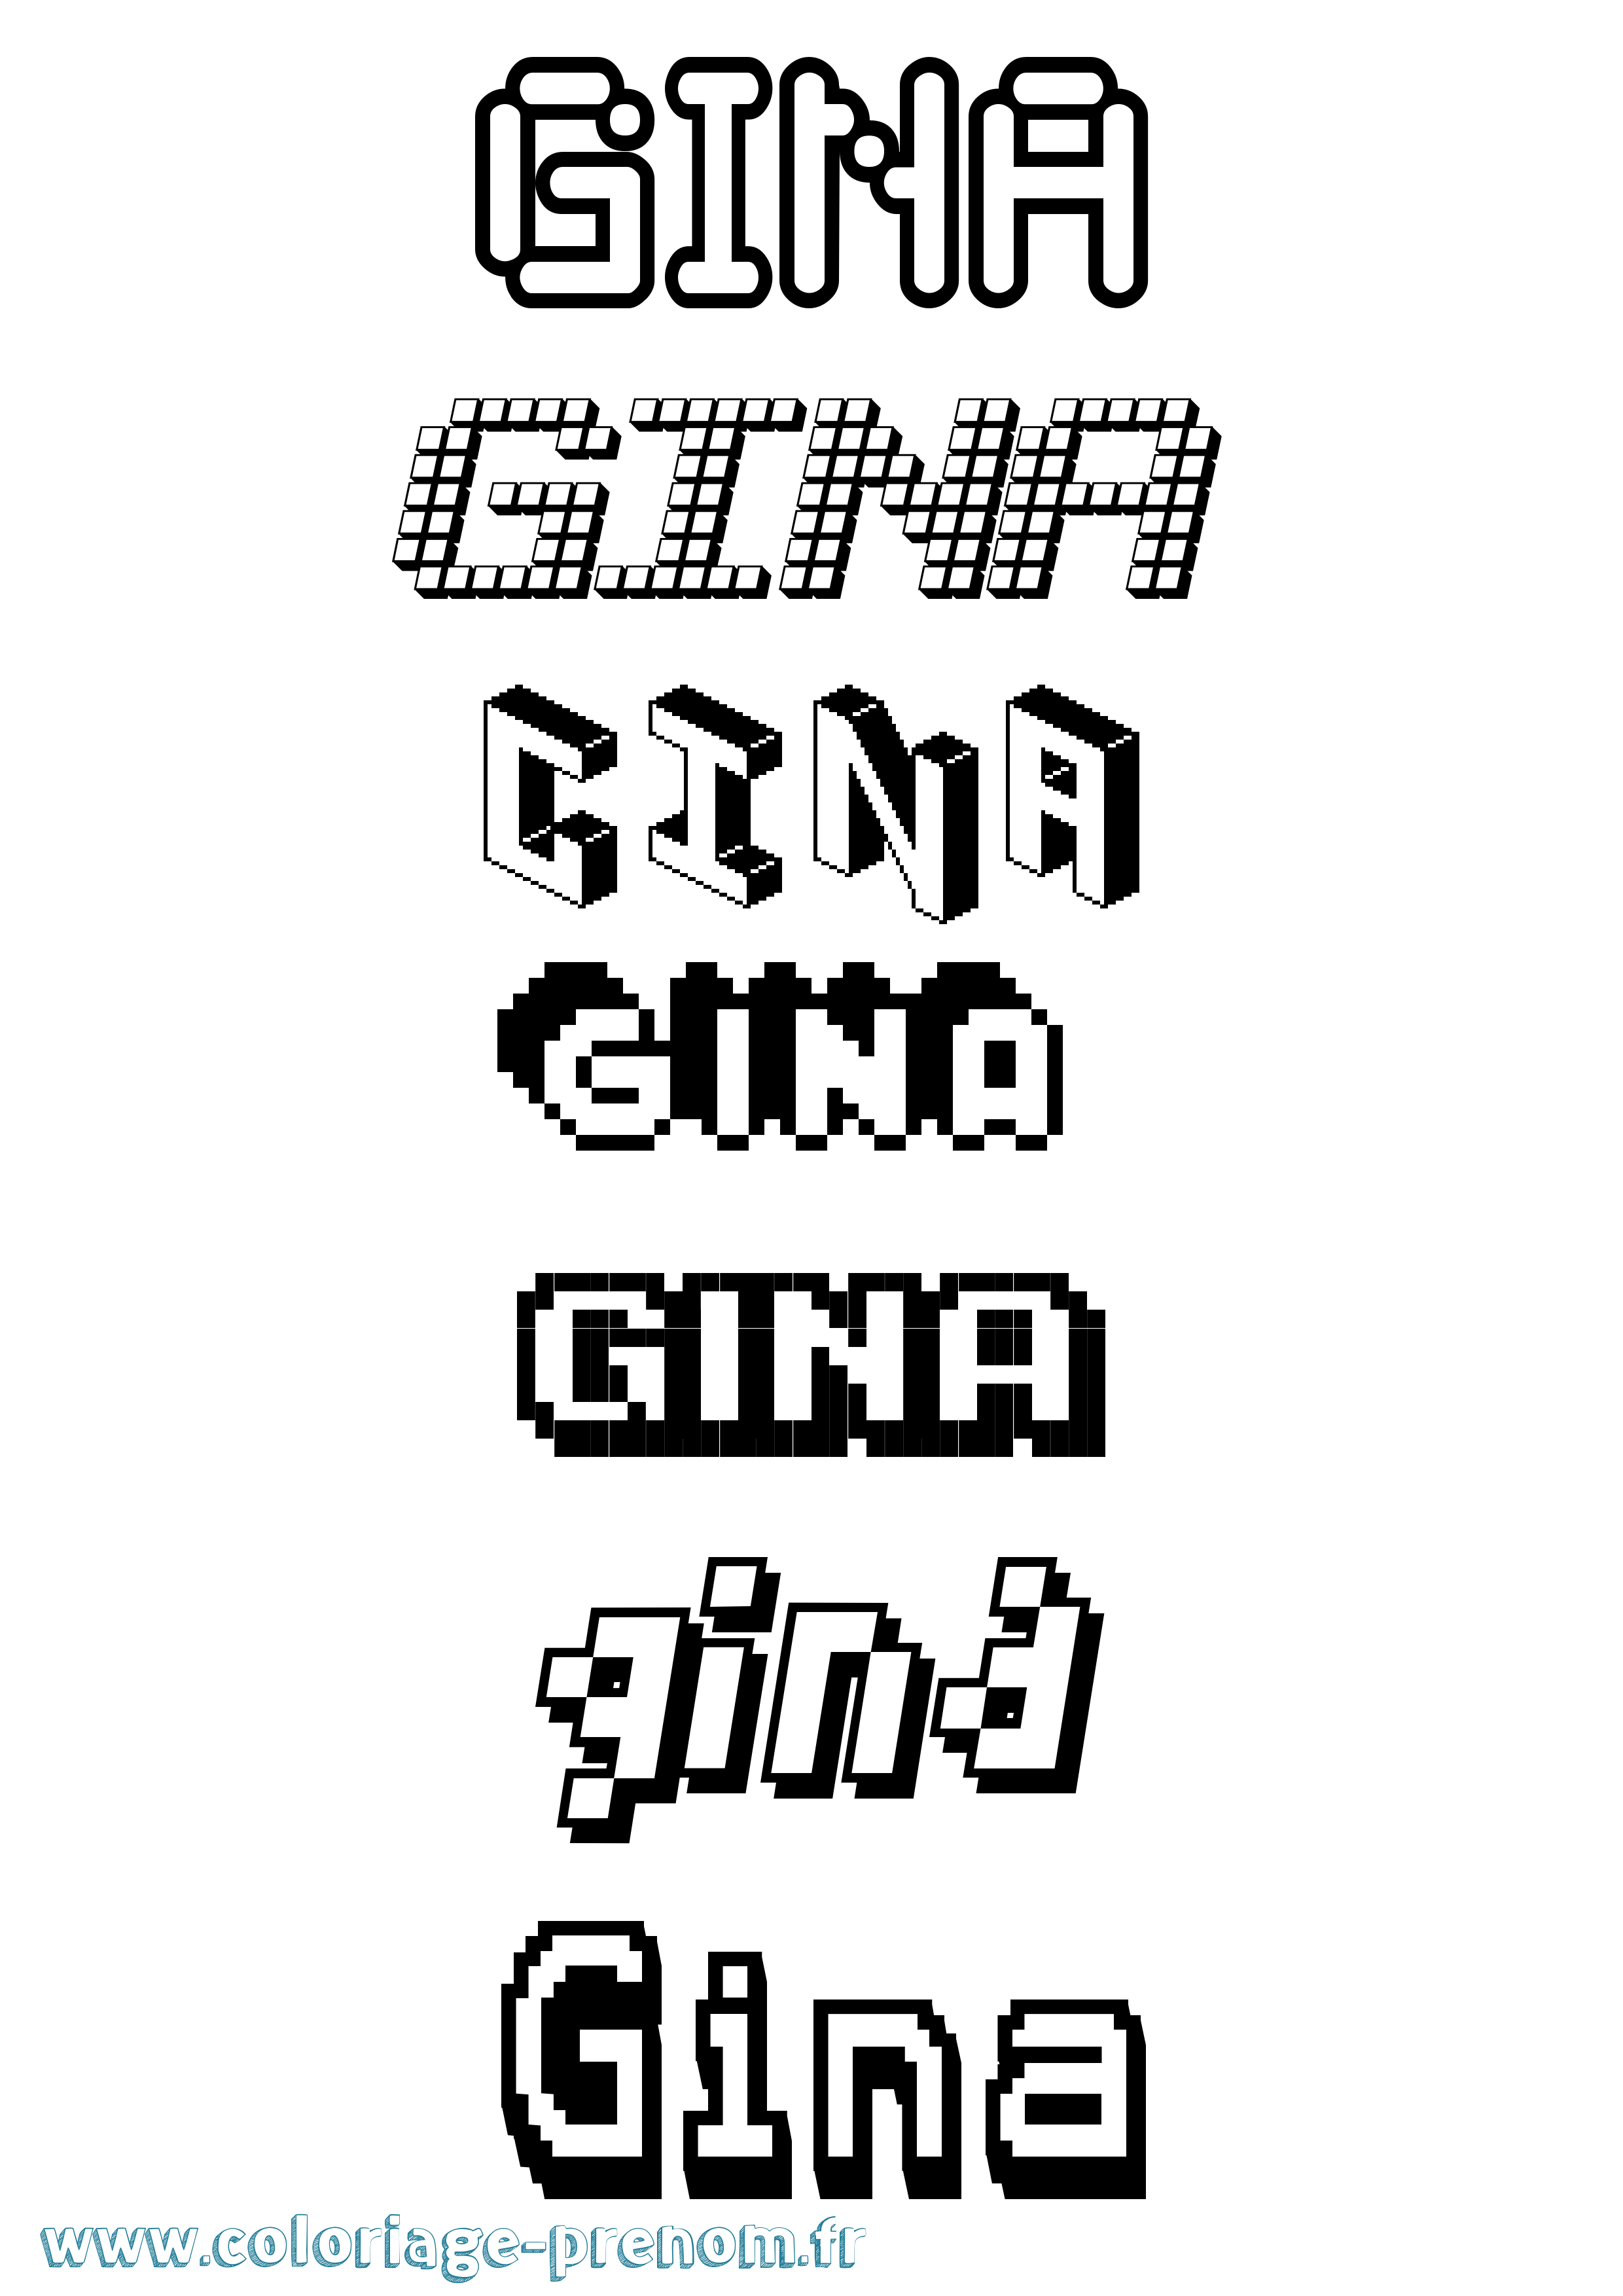 Coloriage prénom Gina Pixel